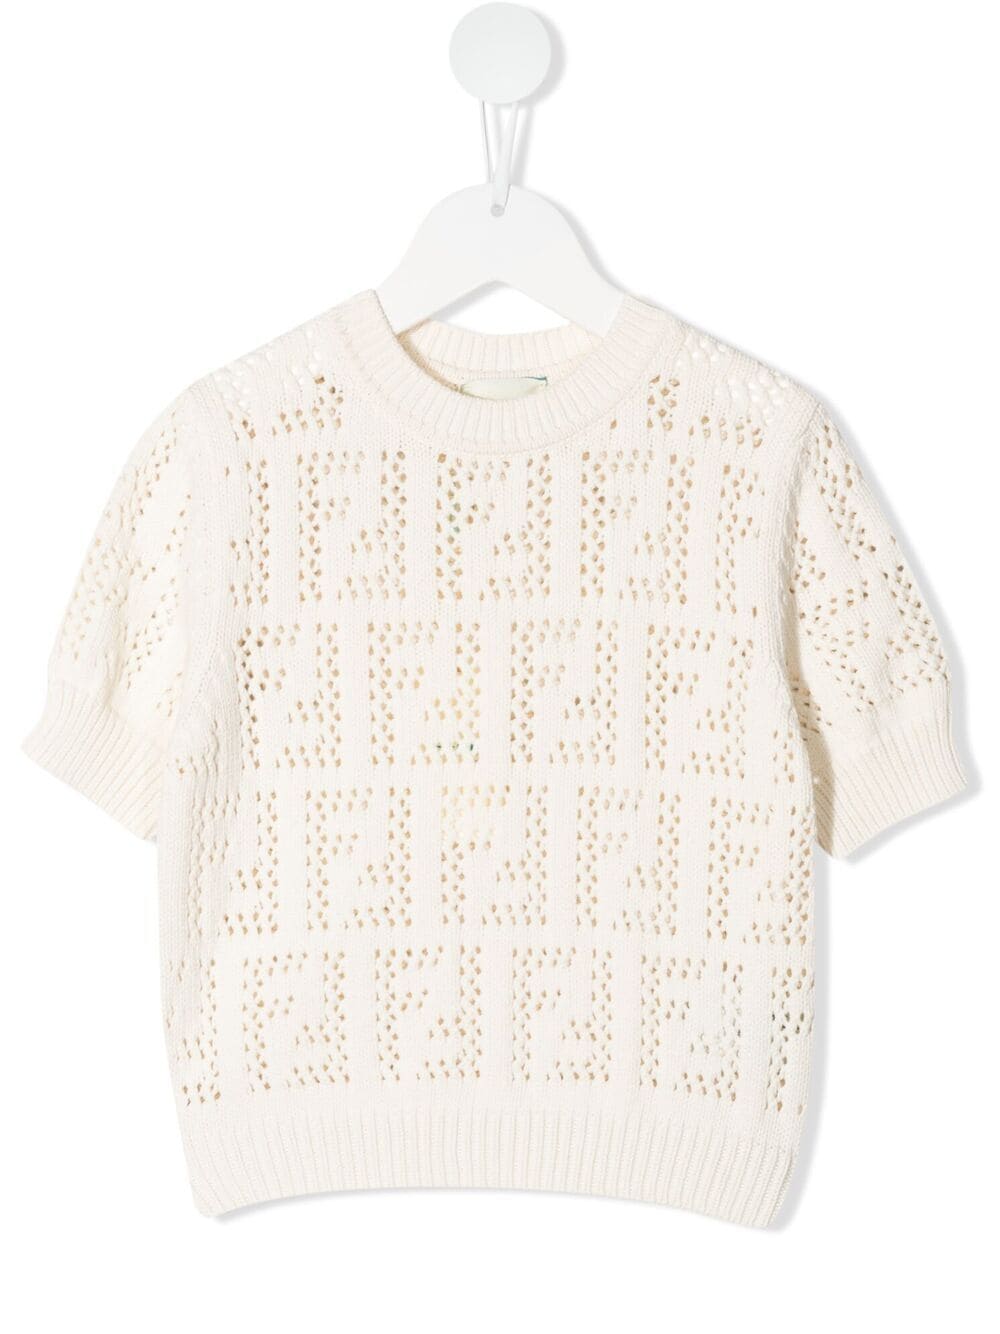 FENDI KIDS FF pattern pullover top